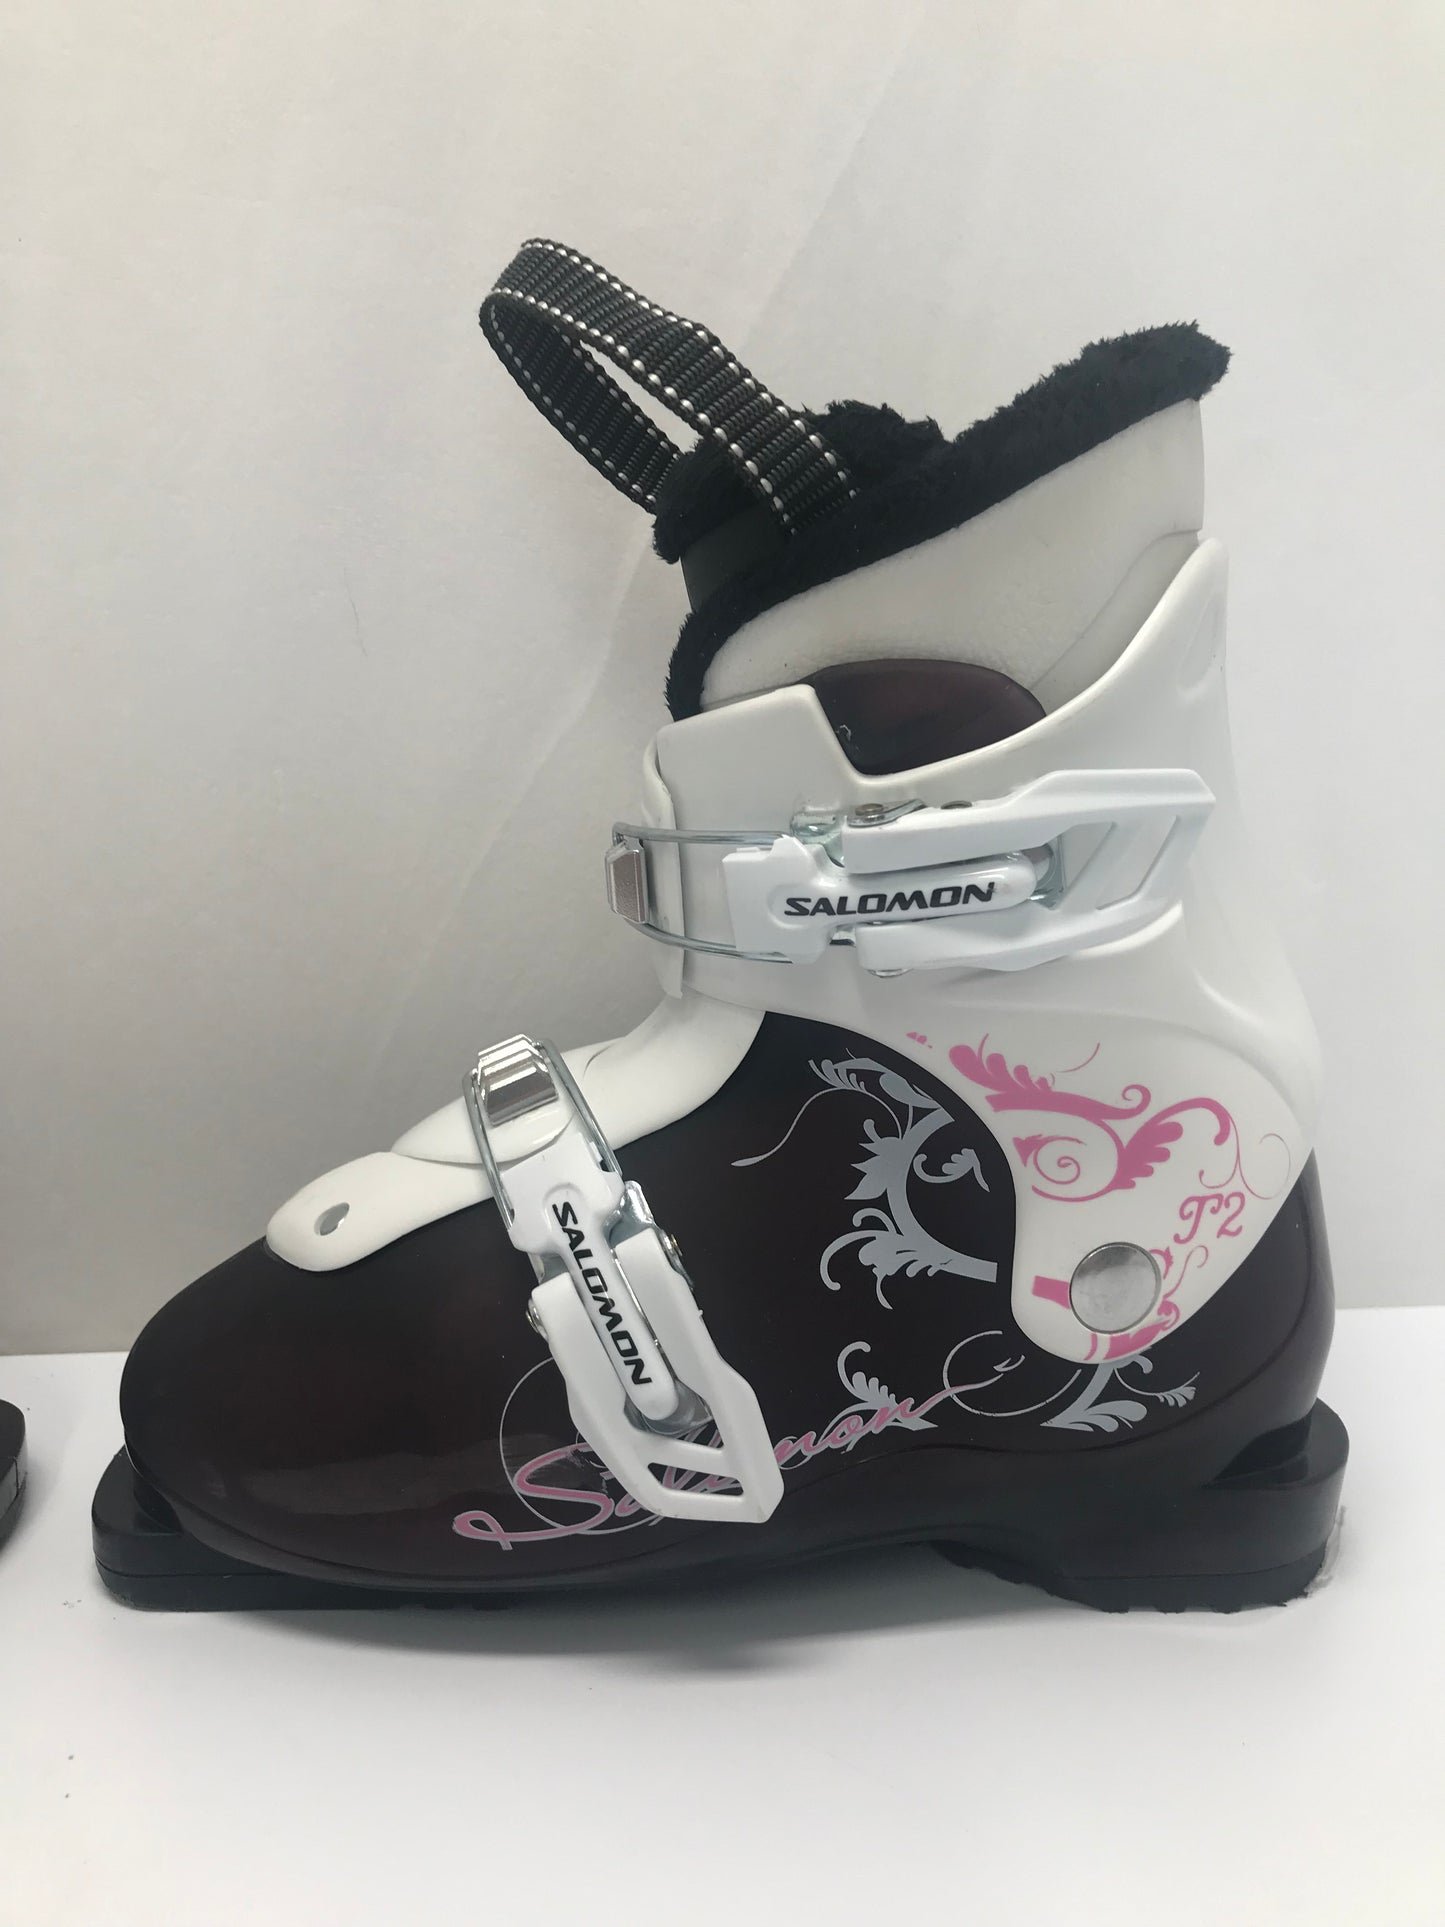 Ski Boots Mondo Size 21.5 Child Size 3-4 259 mm Salomon Plum Pink White Like New